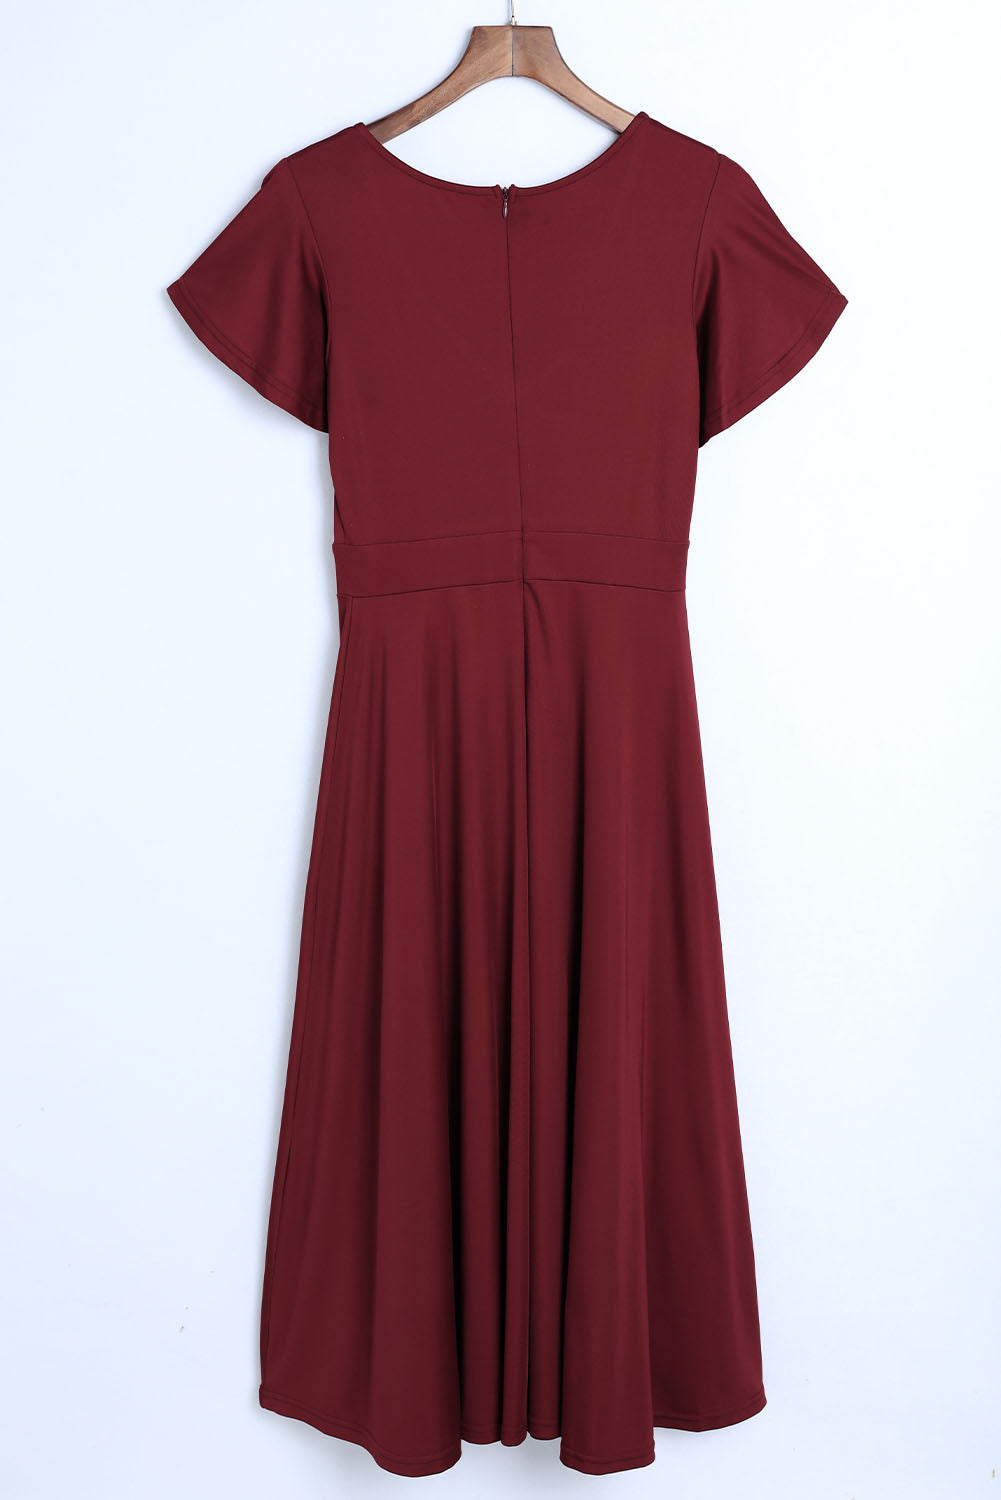 LC6110363-3-S, LC6110363-3-M, LC6110363-3-L, LC6110363-3-XL, LC6110363-3-2XL, Red Womens V Neck Ruffle Sleeve Wrap Dress Midi Dress Cocktail Party Dress